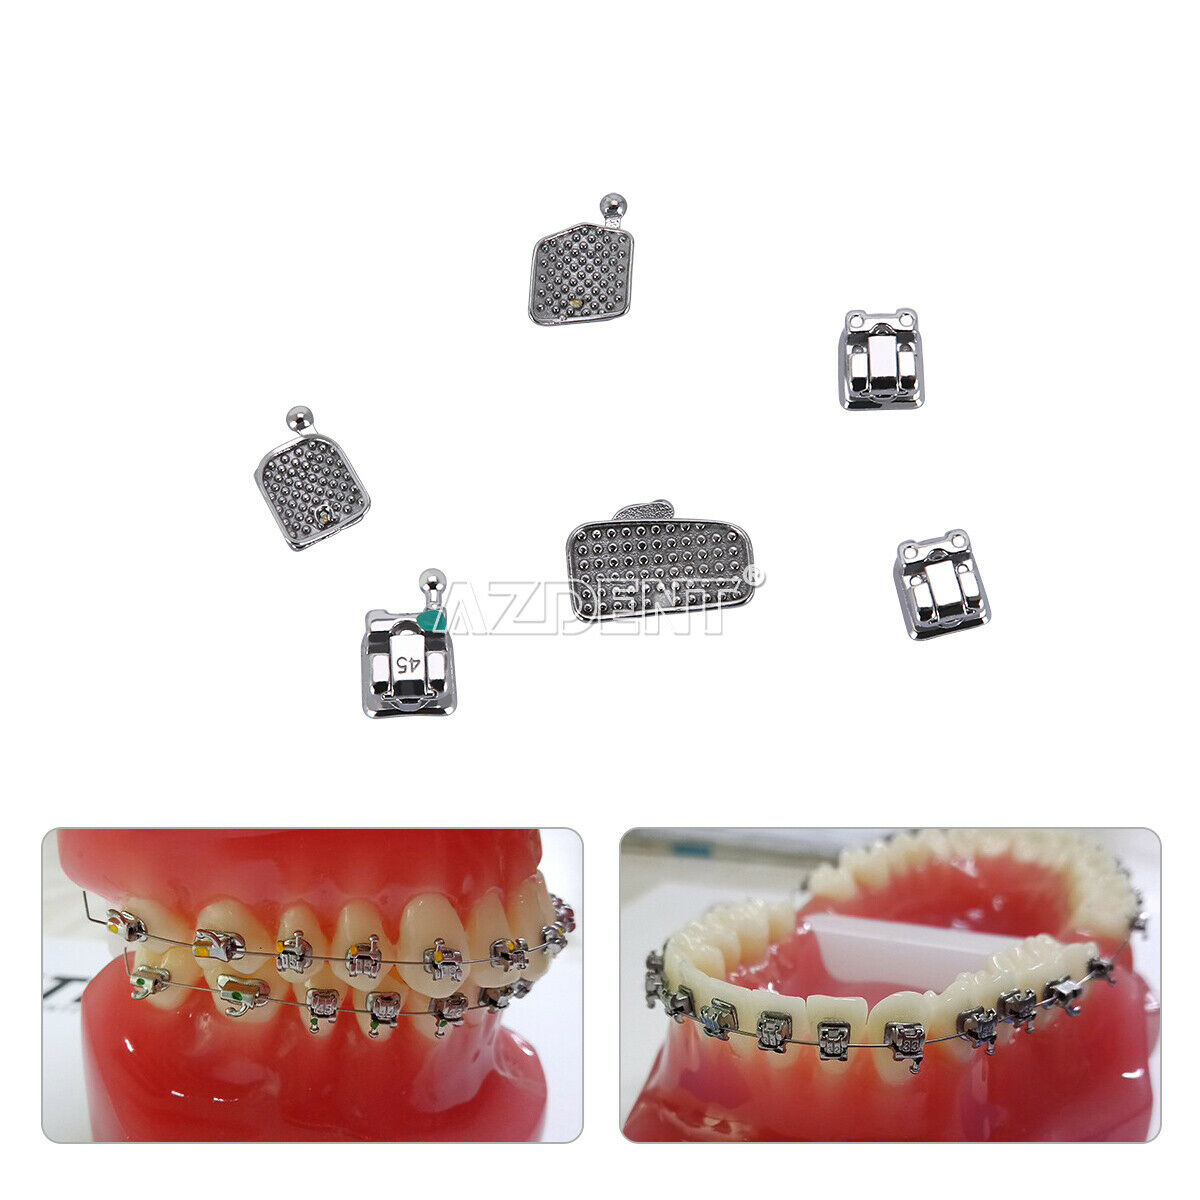 Dental Orthodontic Passive Self Ligating Brackets Roth 0.022" 3 4 5 Hooks